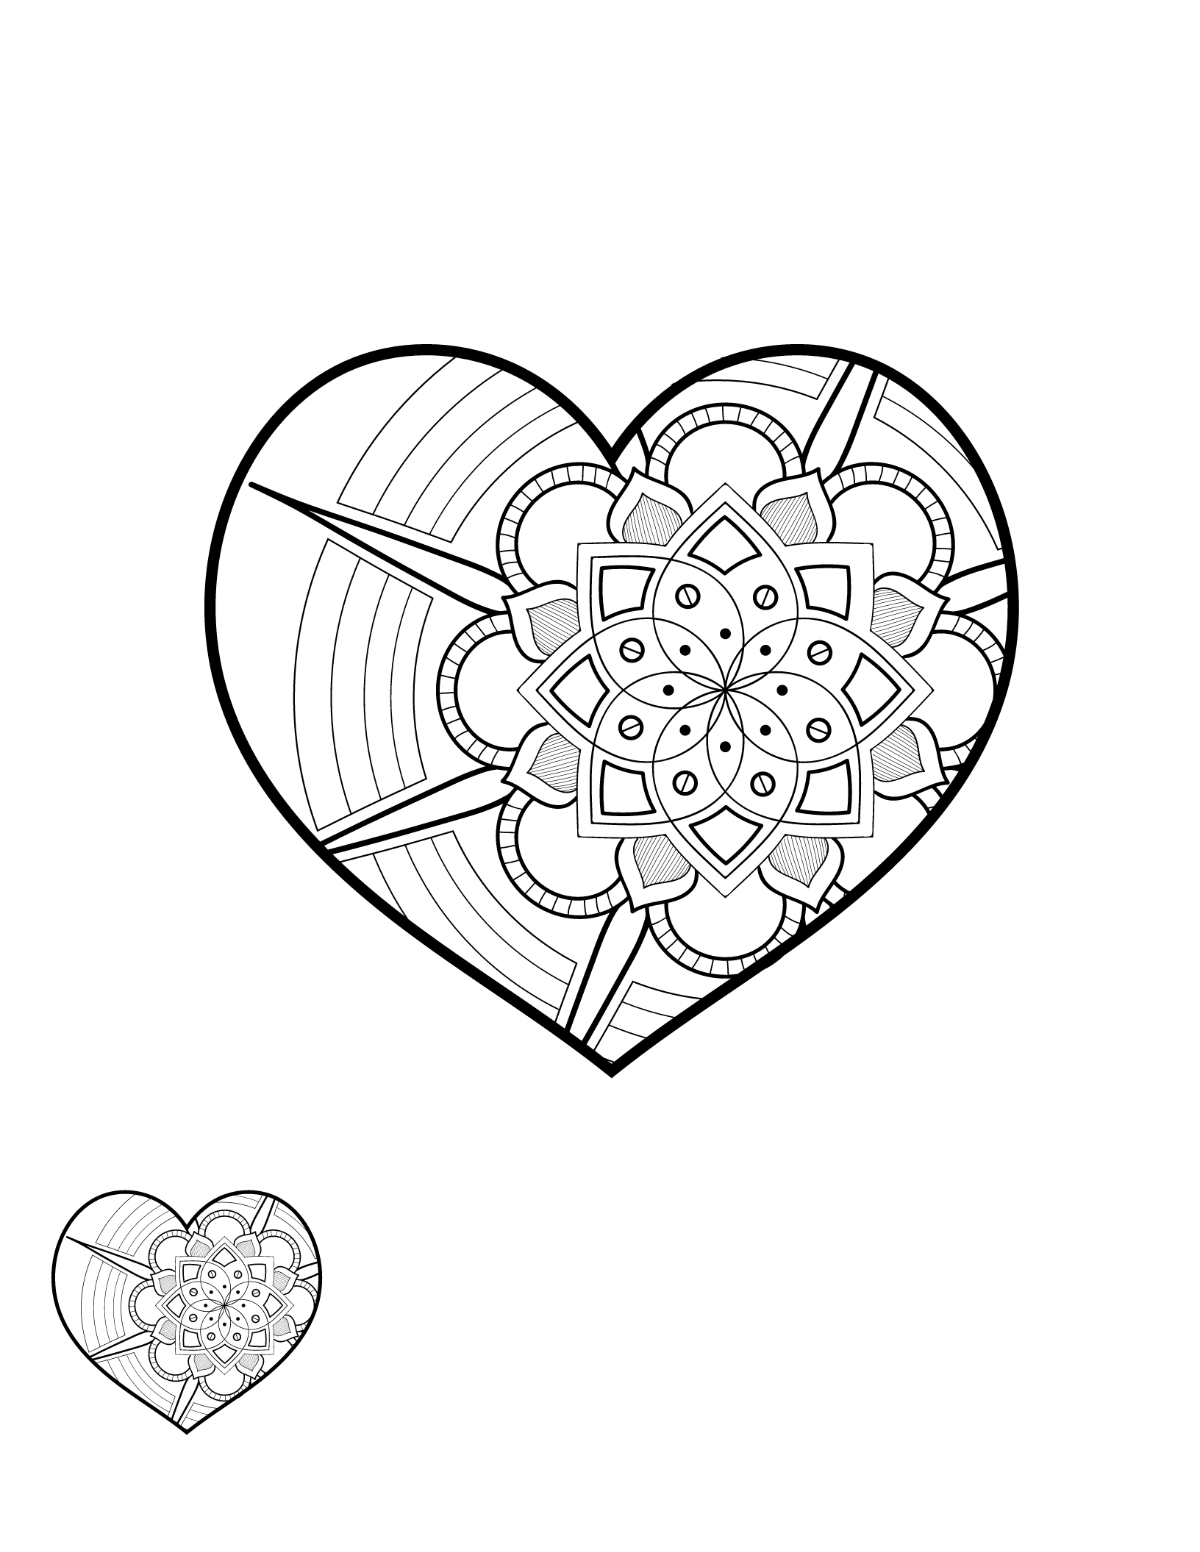 Mandala Heart Coloring Page Template